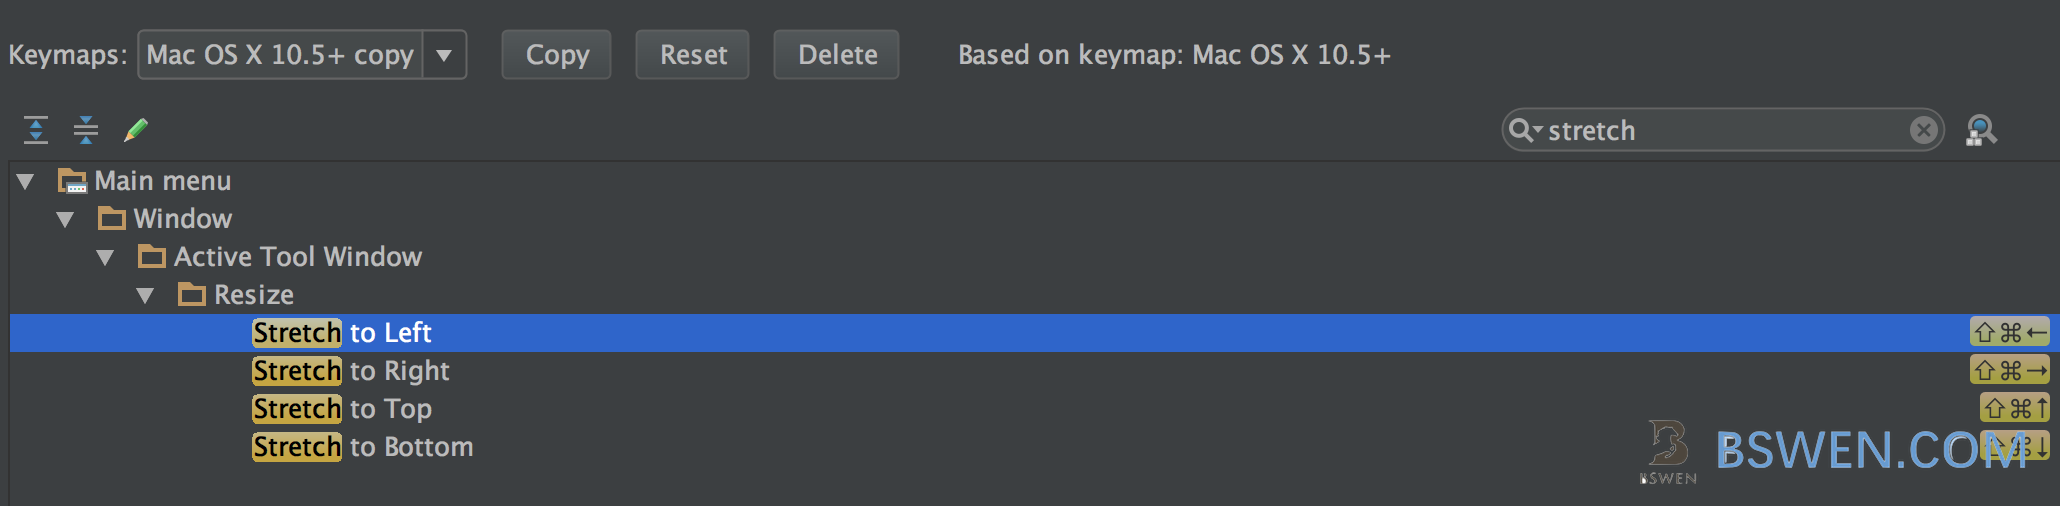 Mac stretch keymap